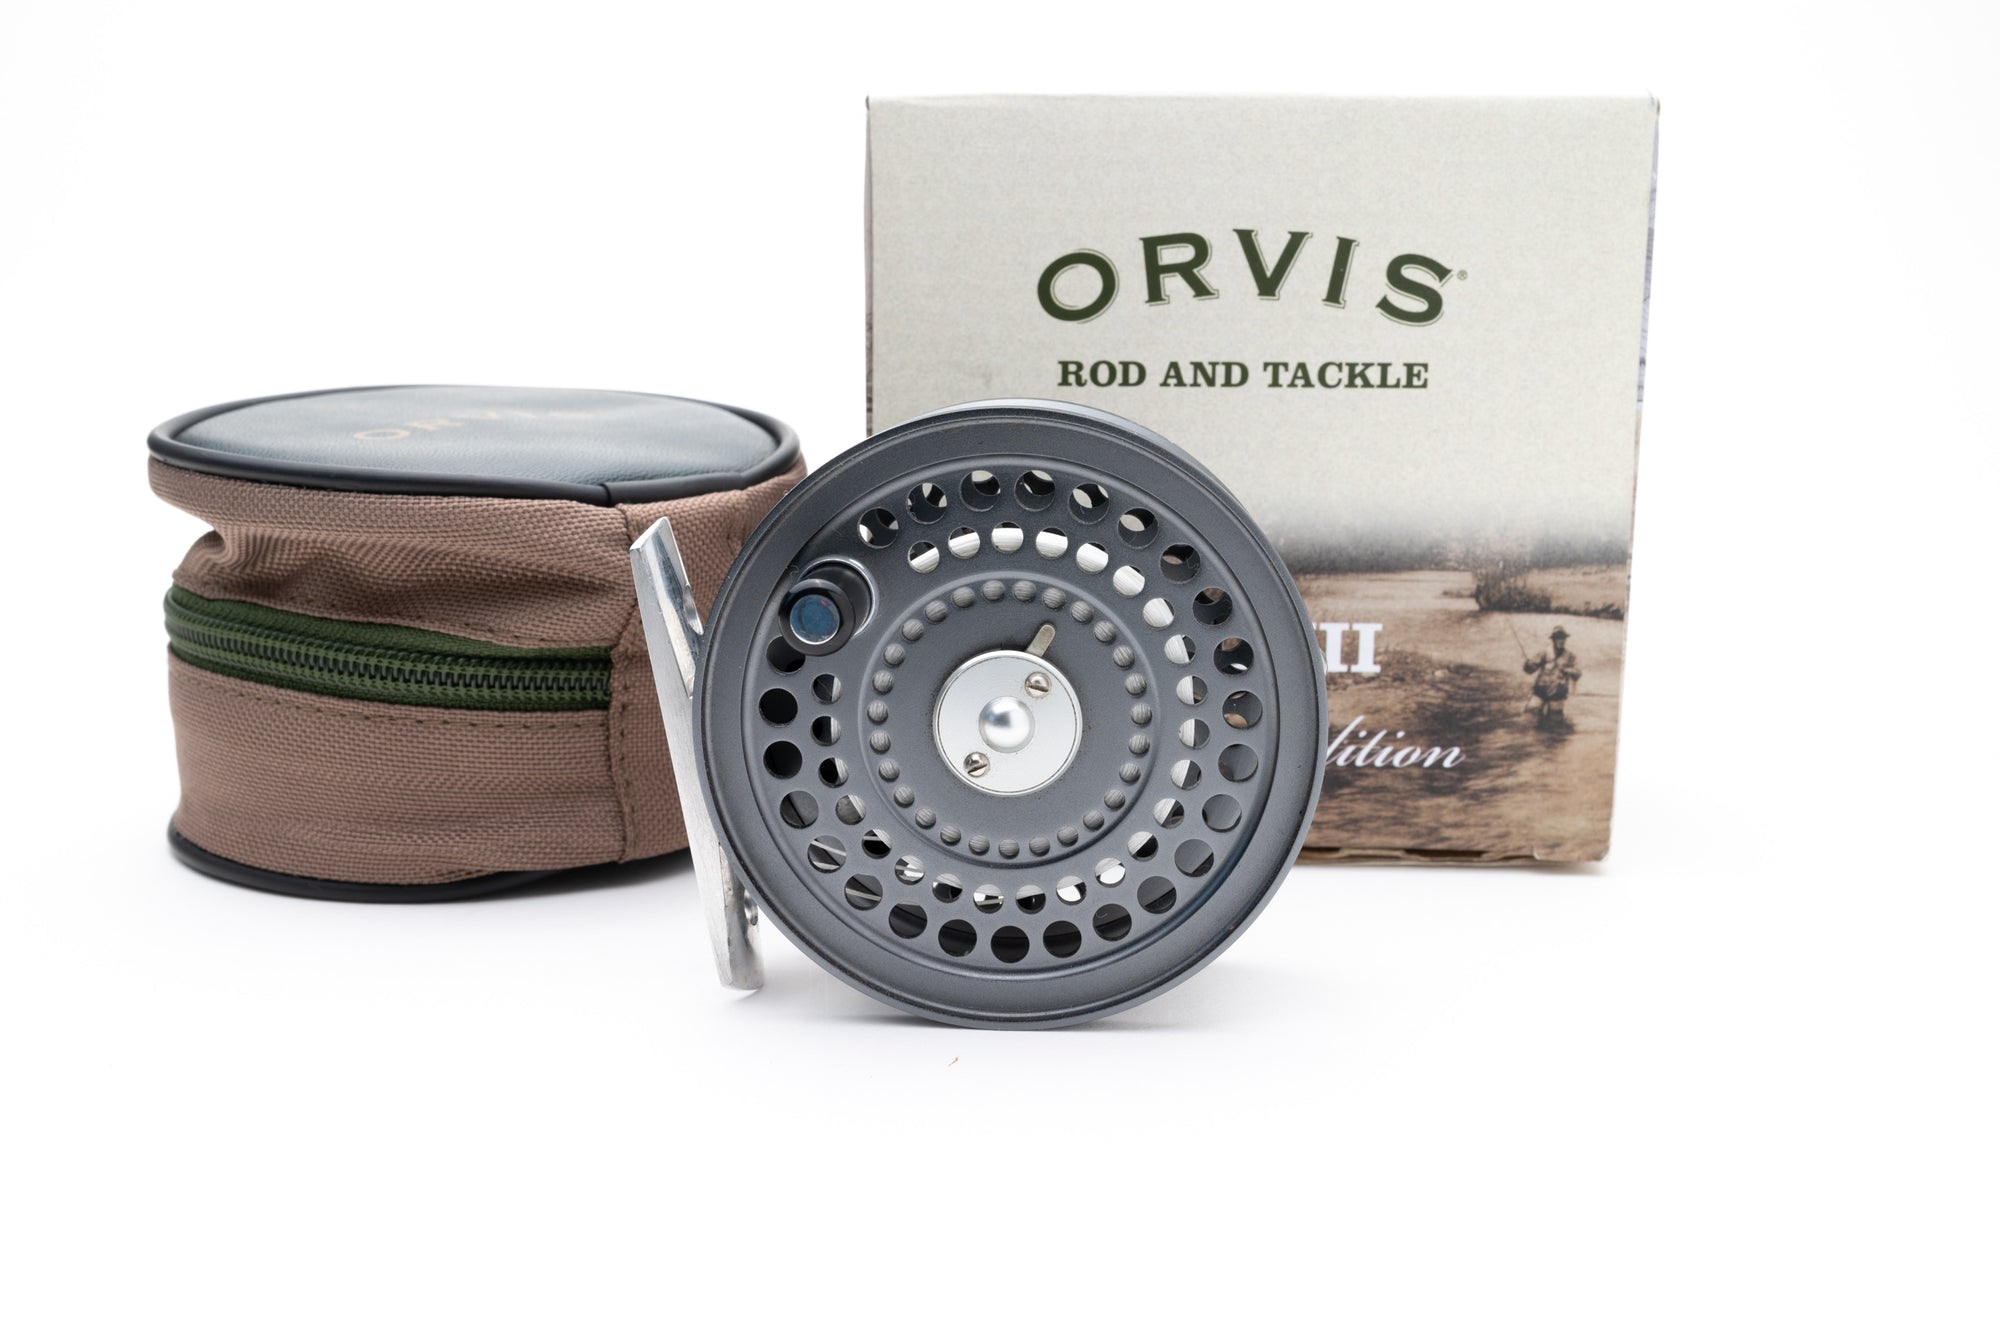 Orvis CFO III Limited Edition Fly Reel